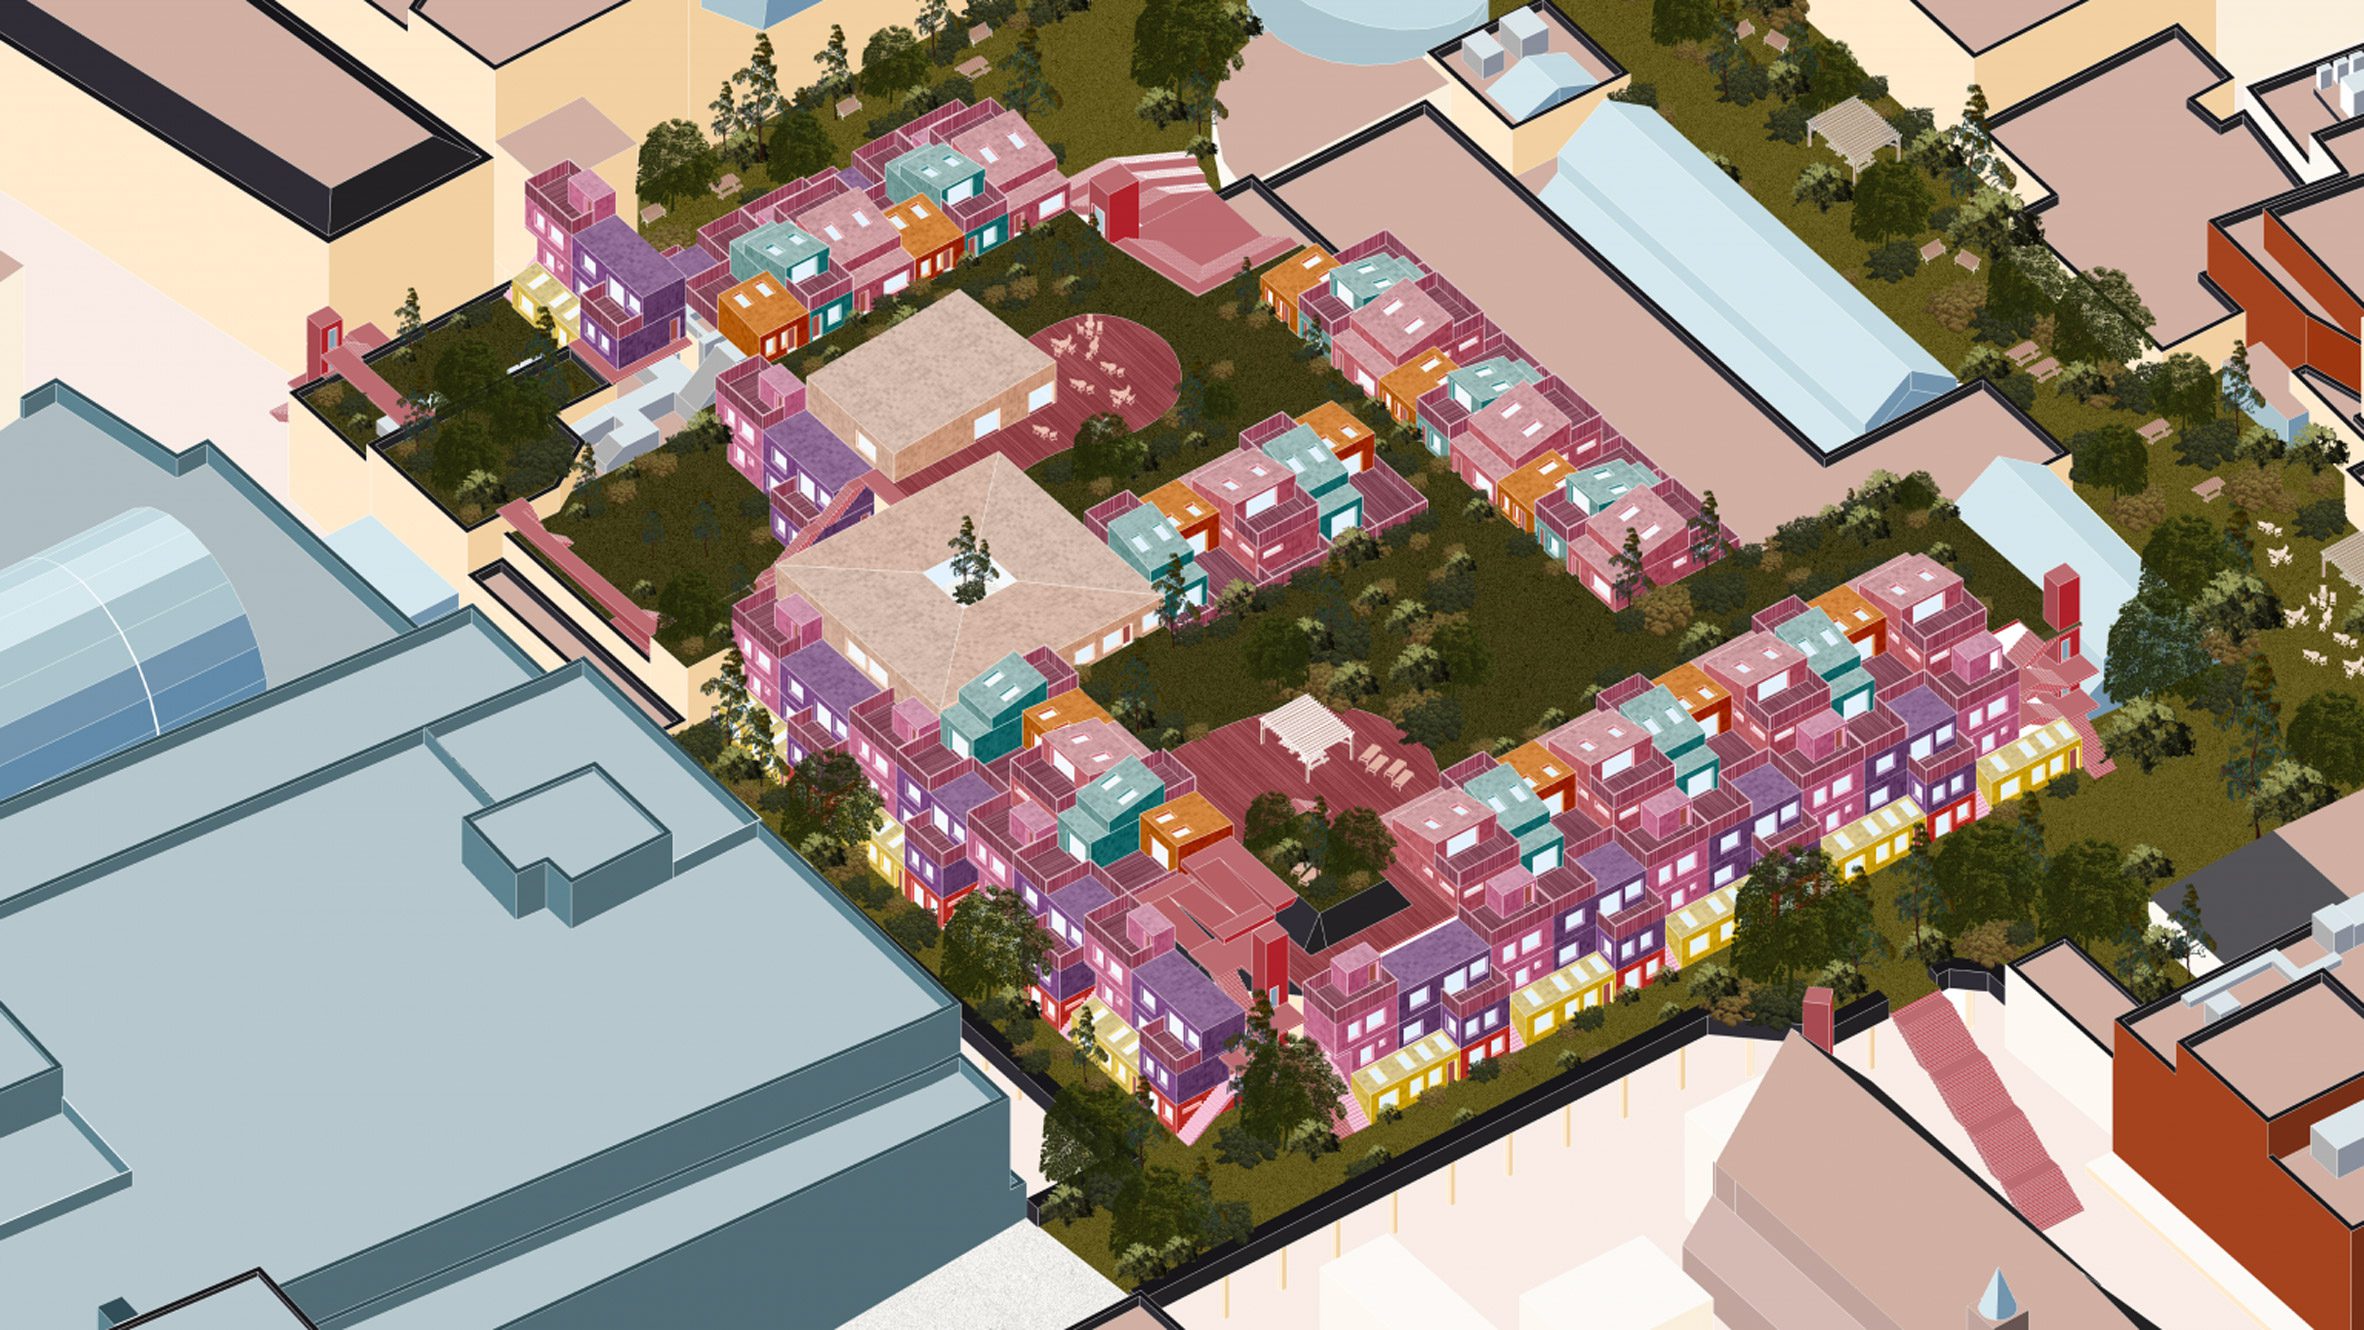 A model of community-based housing